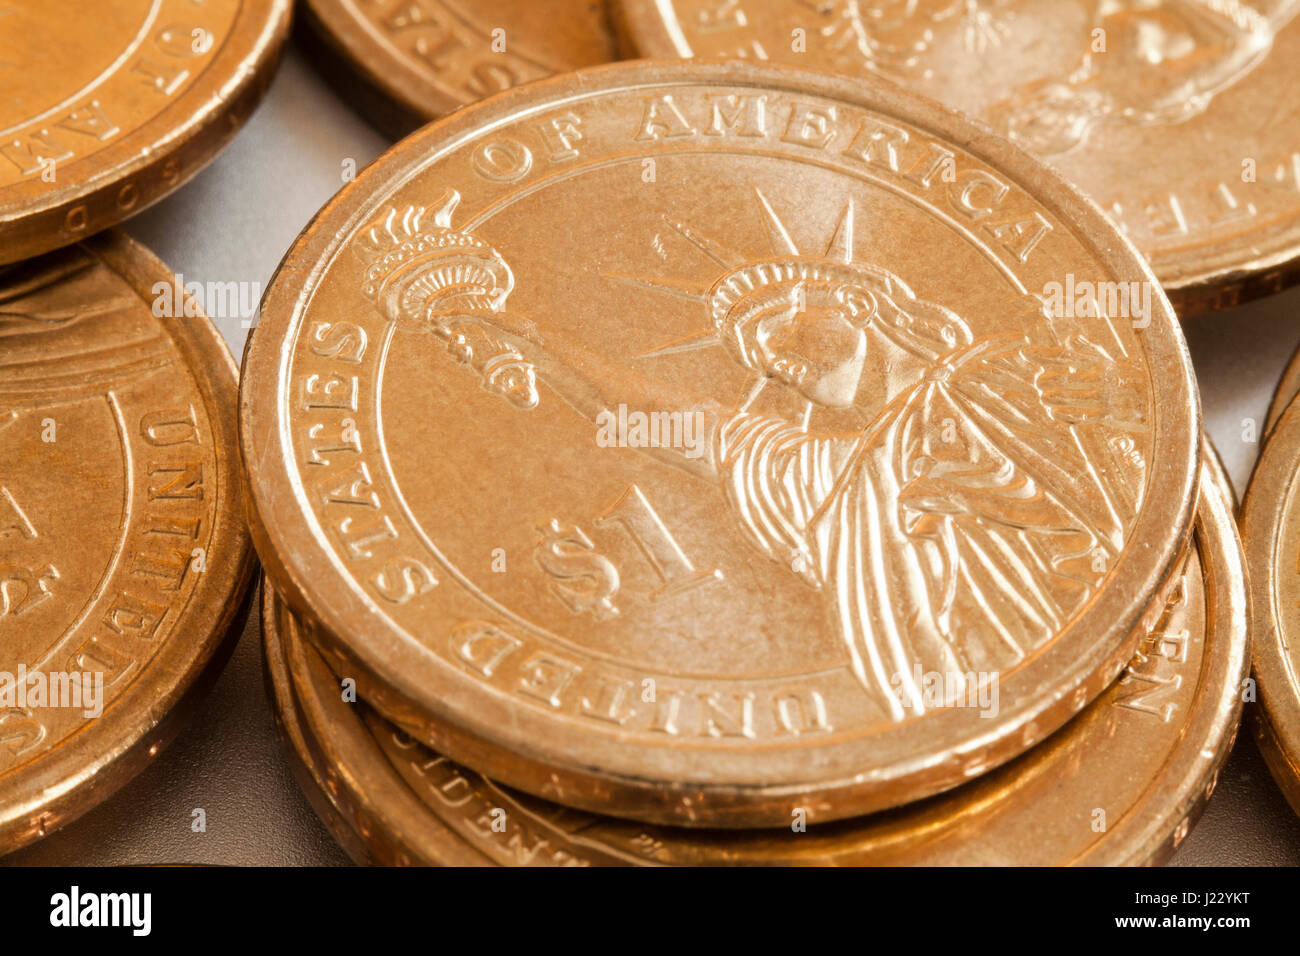 Presidential 1 dollaro moneta (US $ 1 monete in vista di retromarcia) - USA Foto Stock